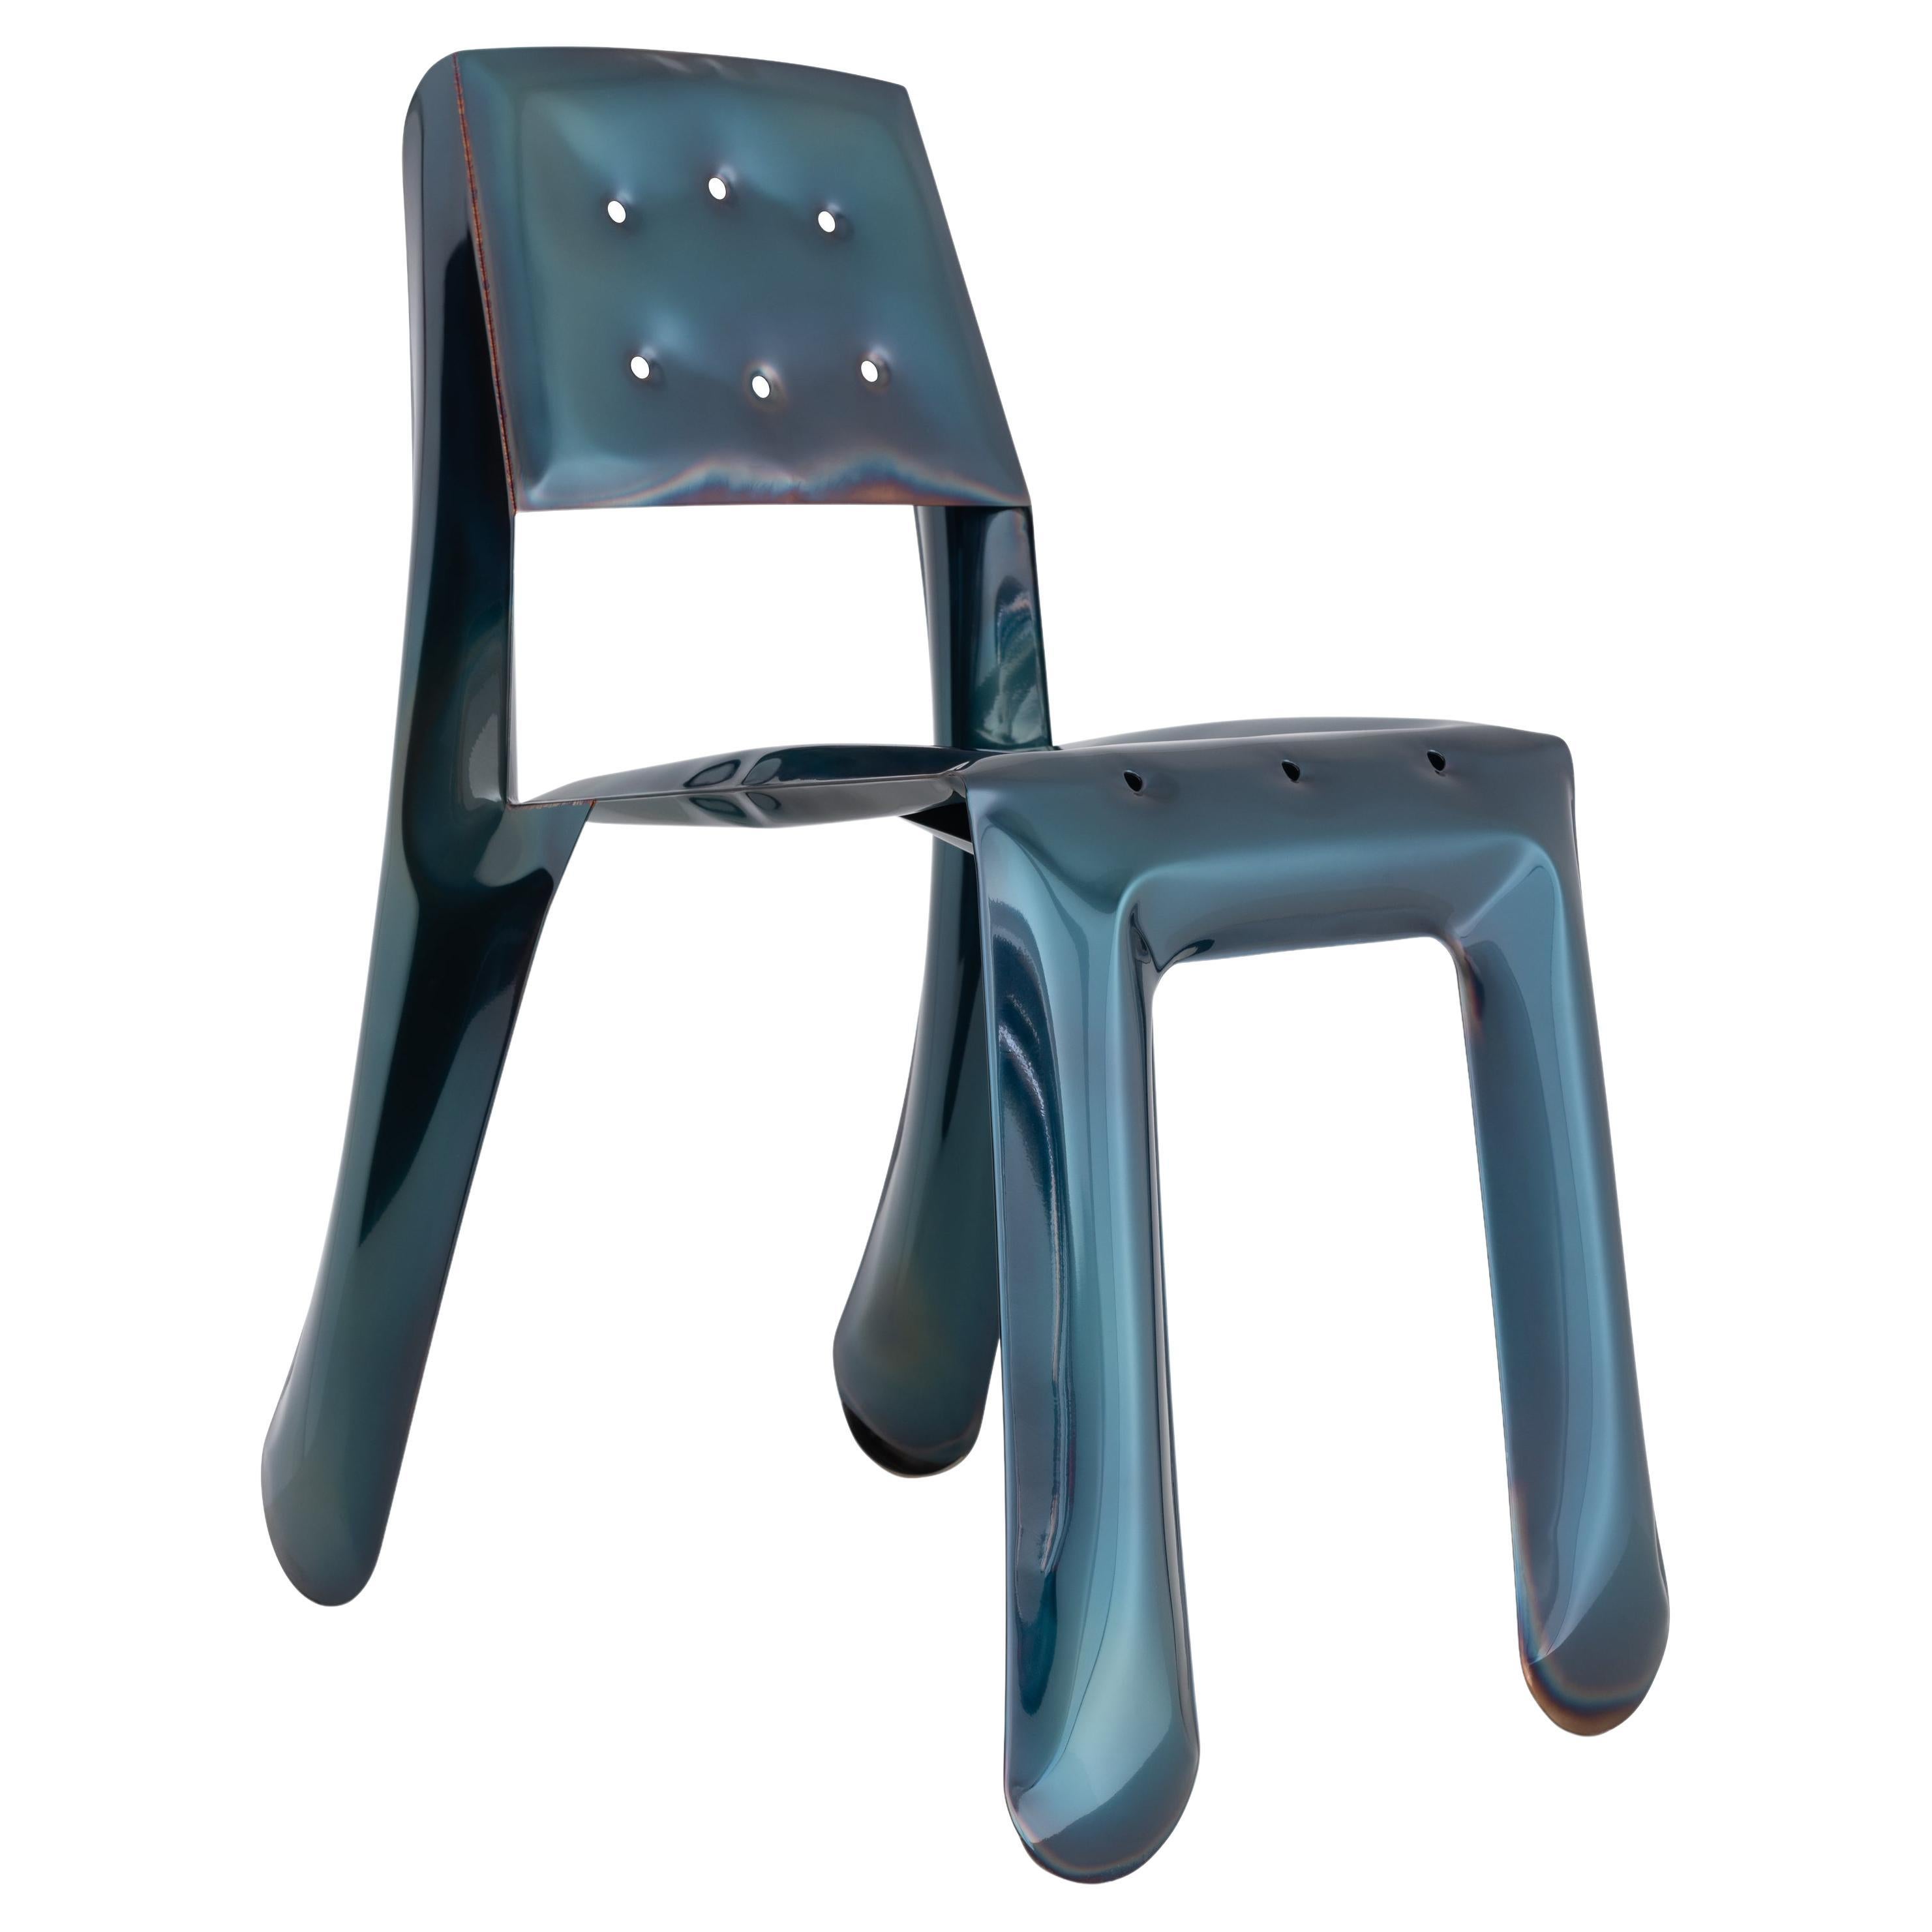 Cosmic Blue Chippensteel 0.5 Sculptural Chair by Zieta For Sale